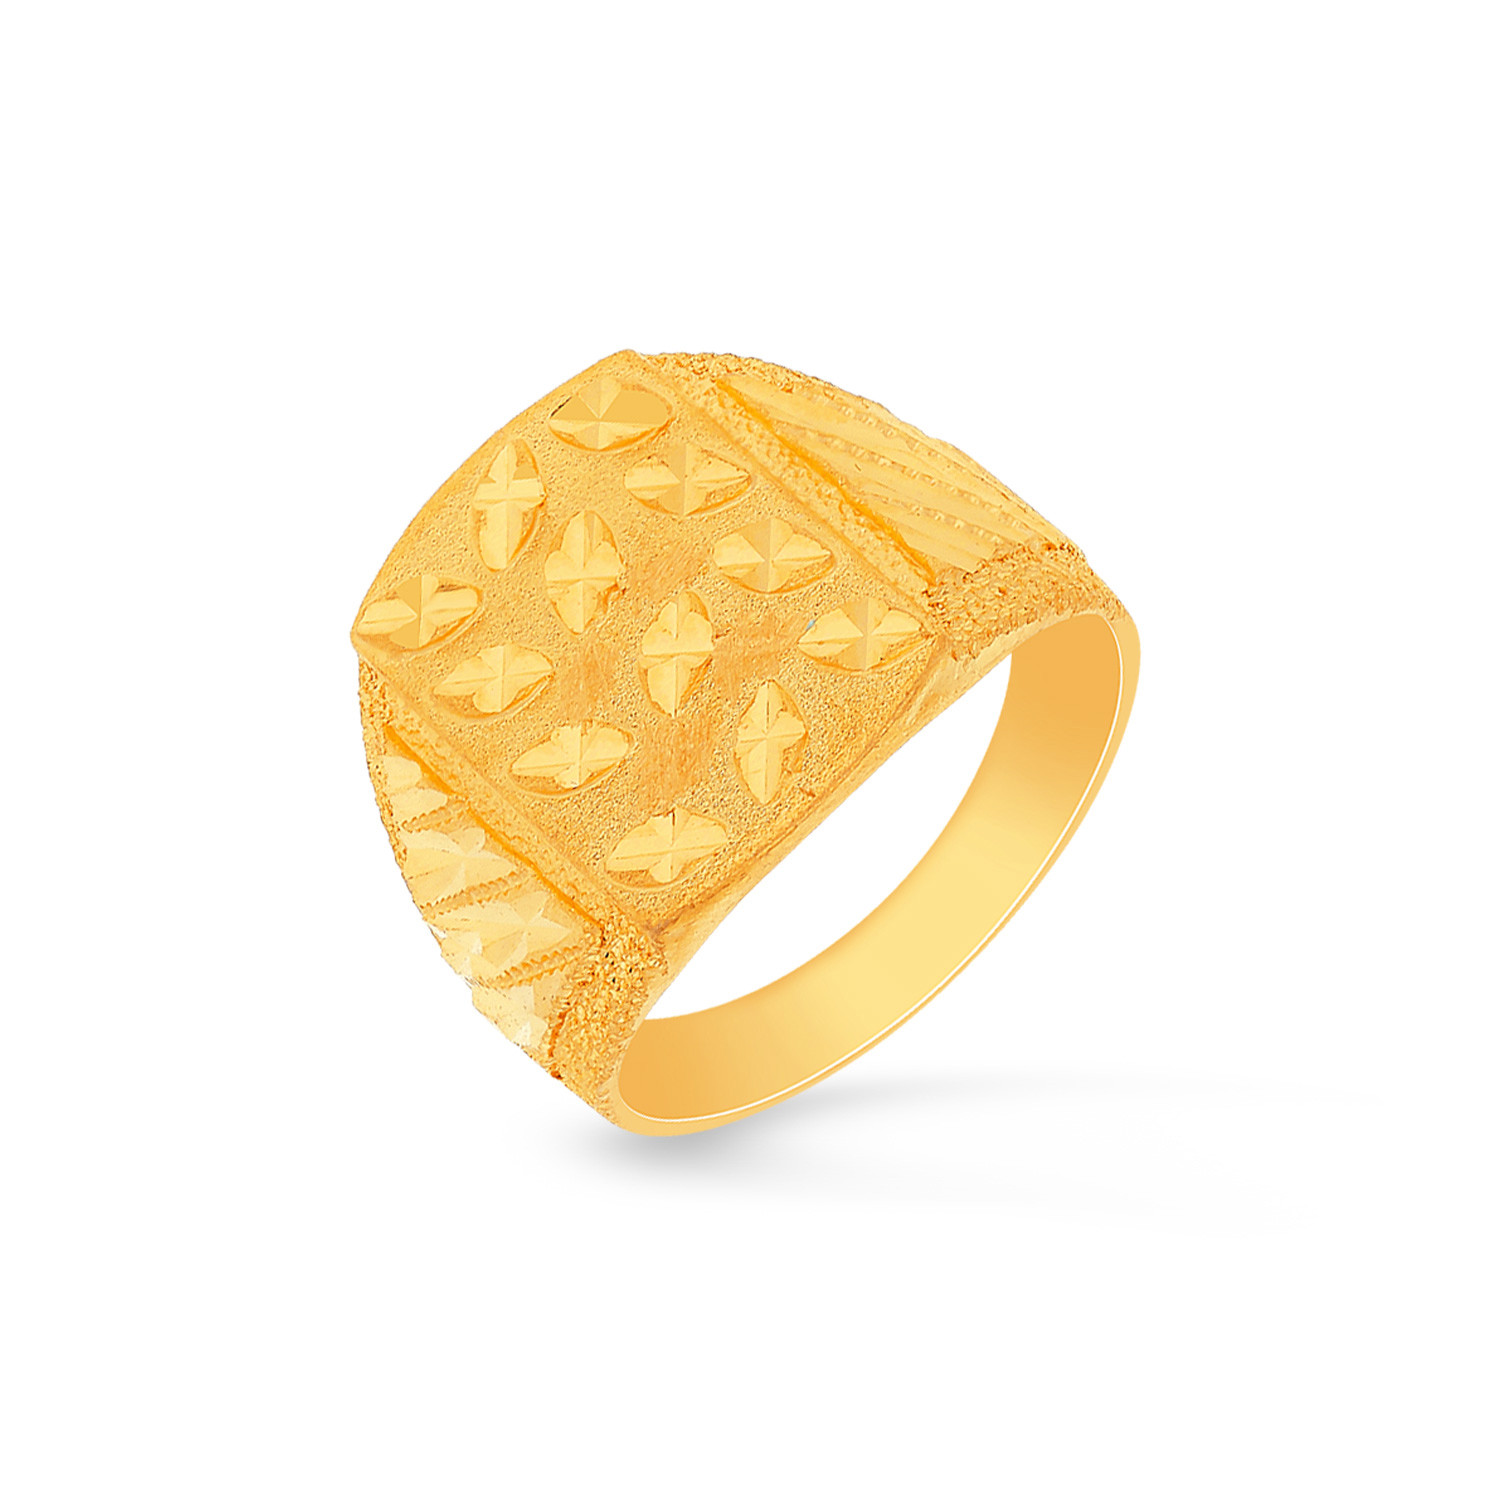 Buy Malabar Gold Ring RG1940707 for Men Online | Malabar Gold & Diamonds